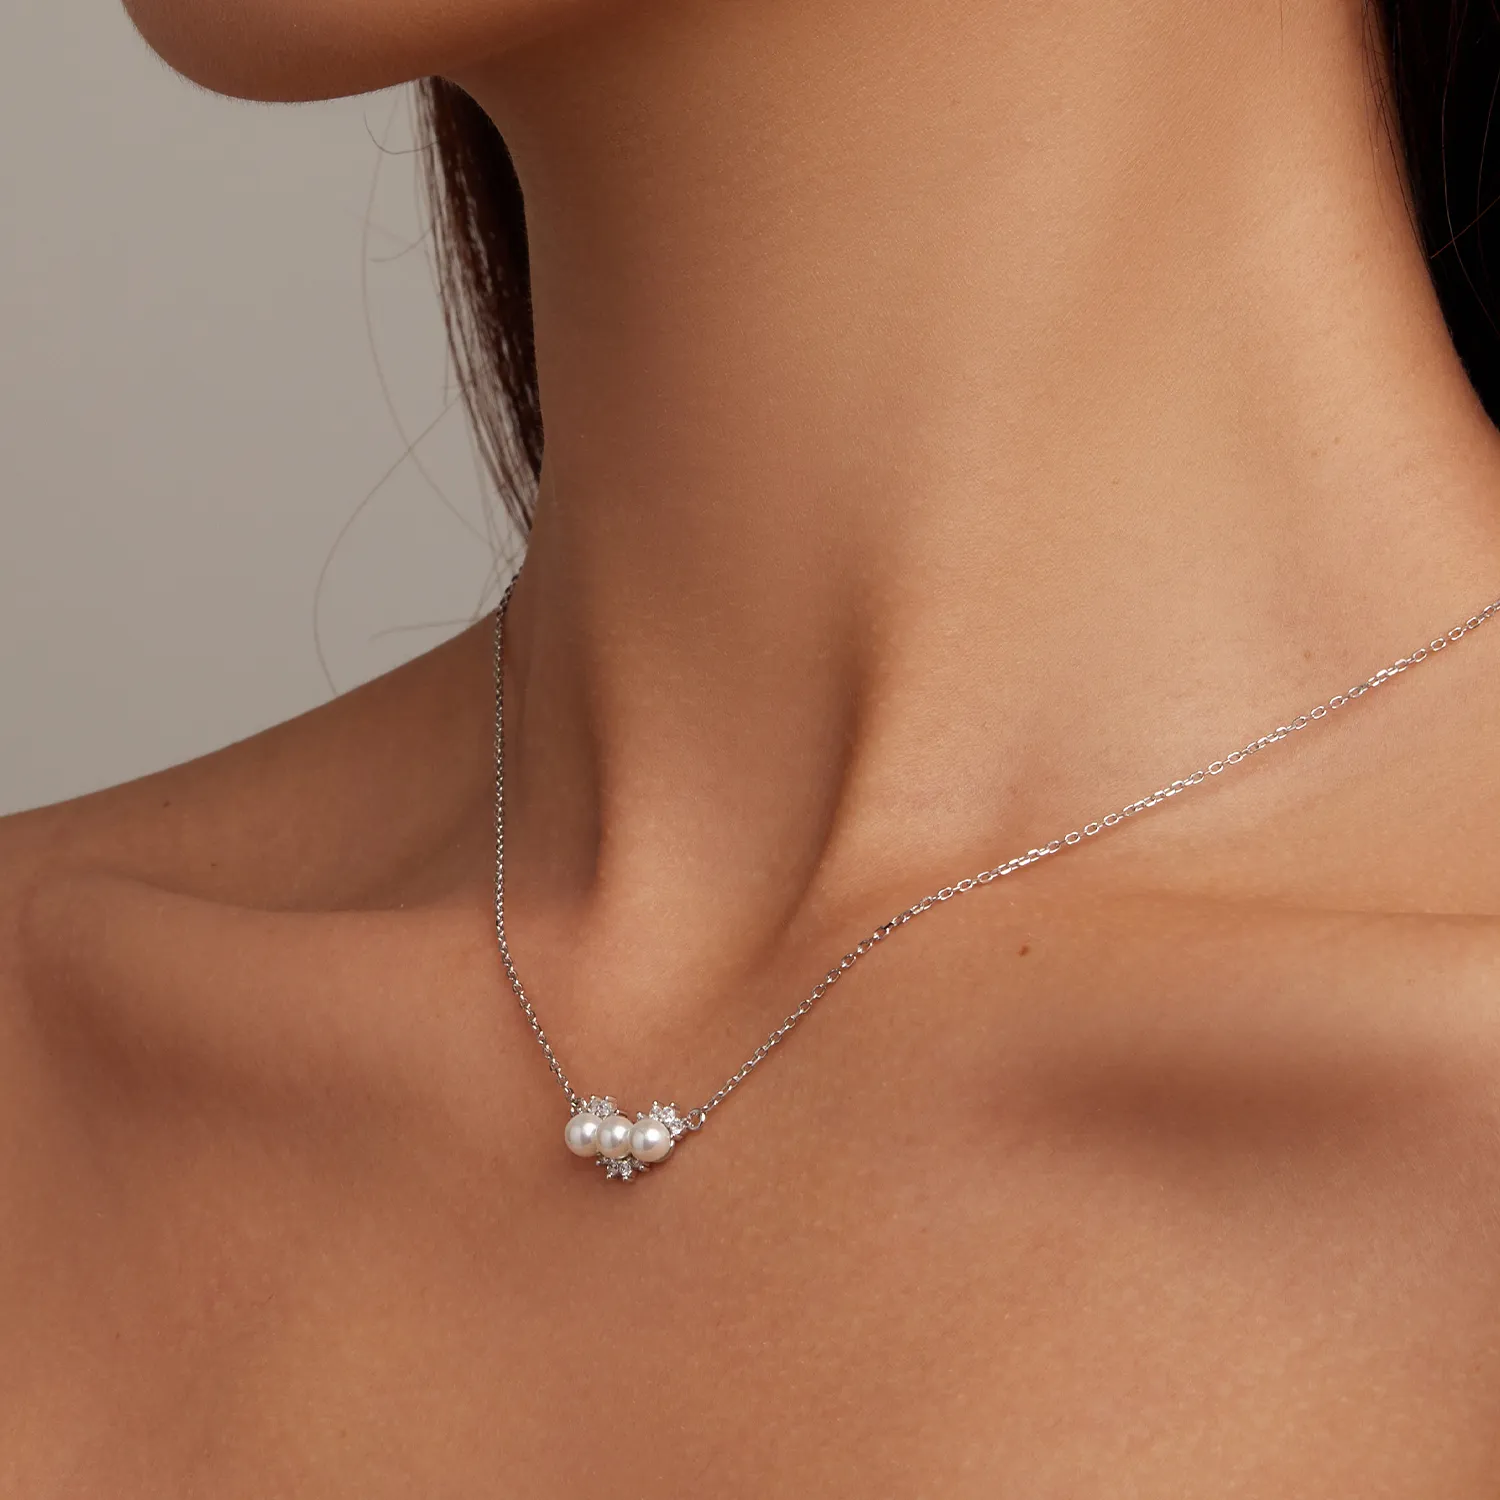 Pandora Style Shell Beads Necklace - BSN269